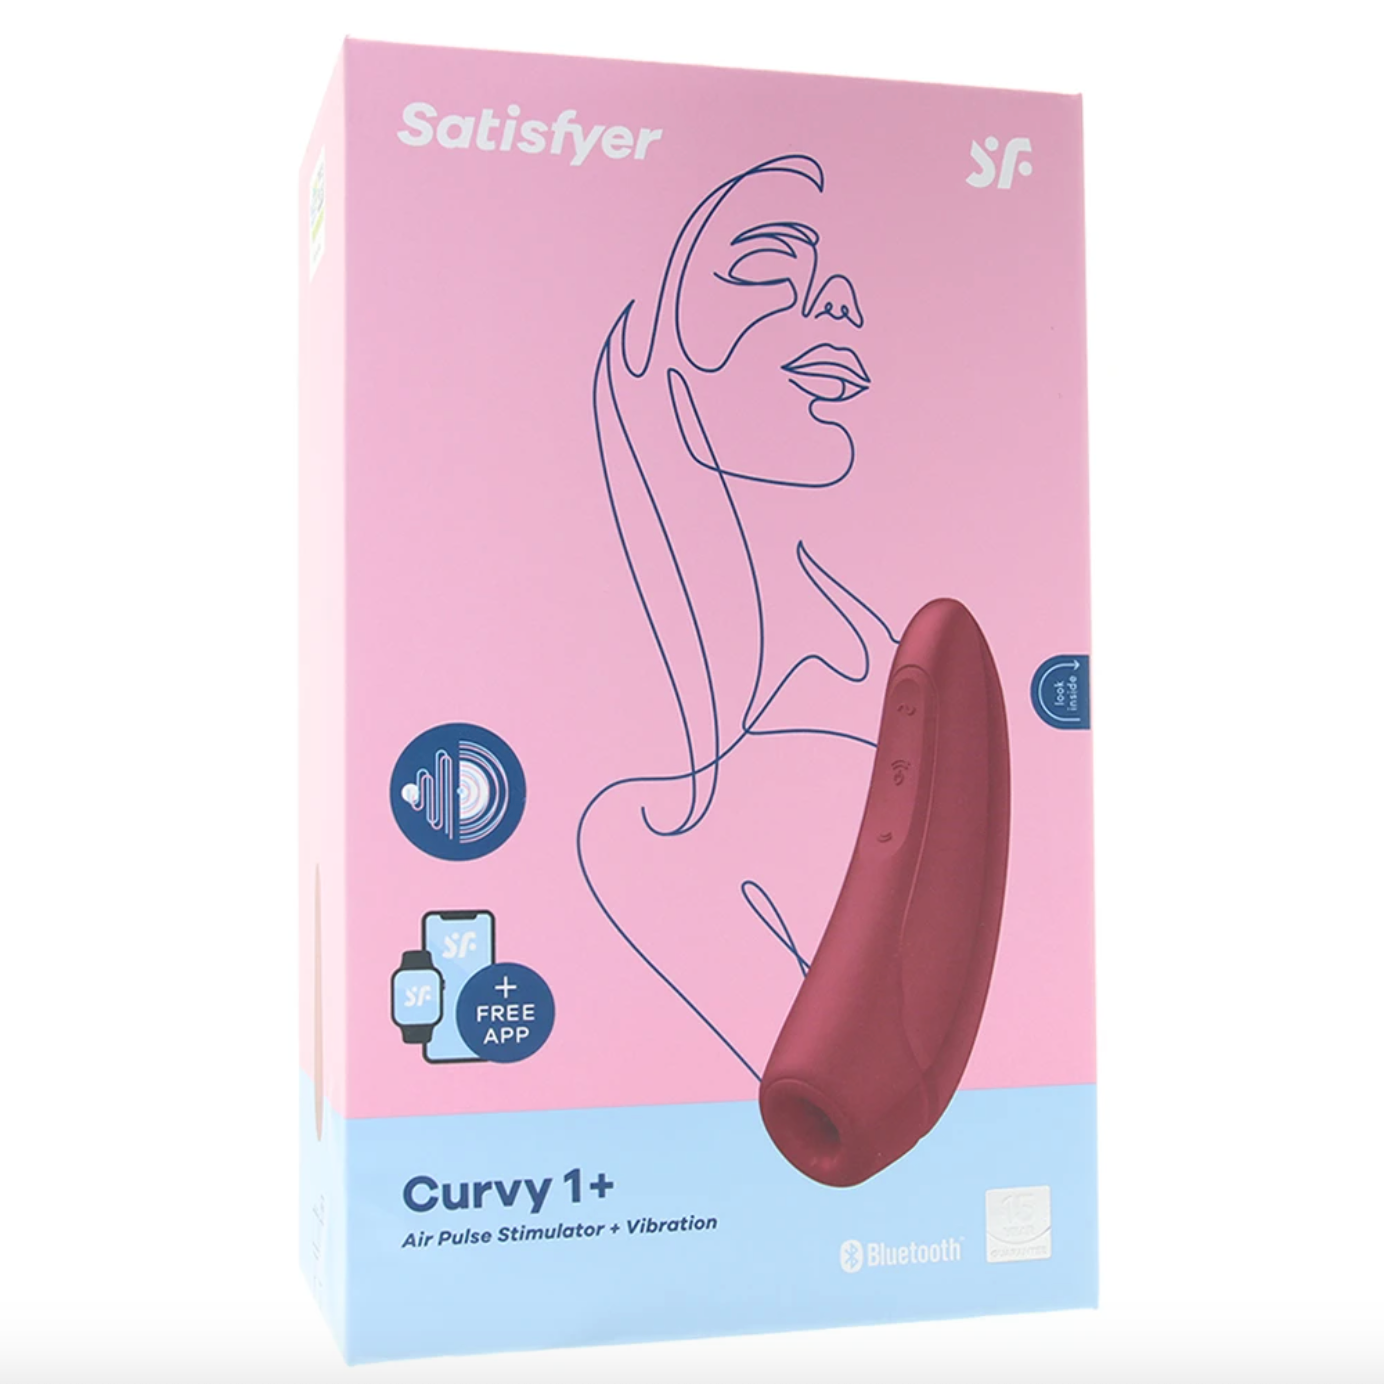 Satisfyer Curvy 1+ Air Pulse Stimulator